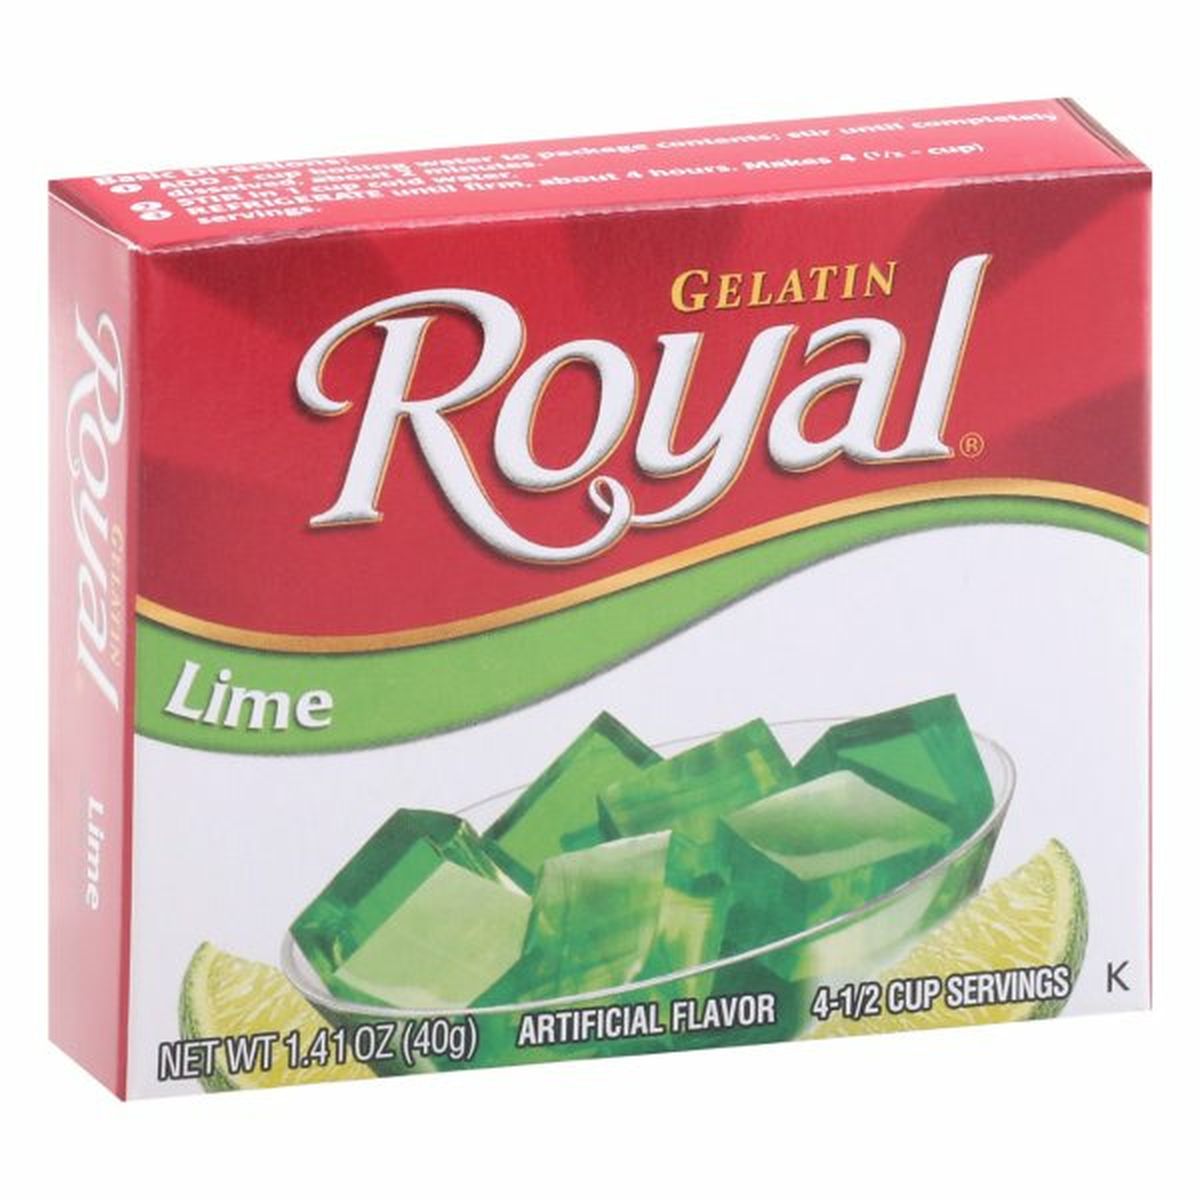 Calories in Royal Gelatin, Lime